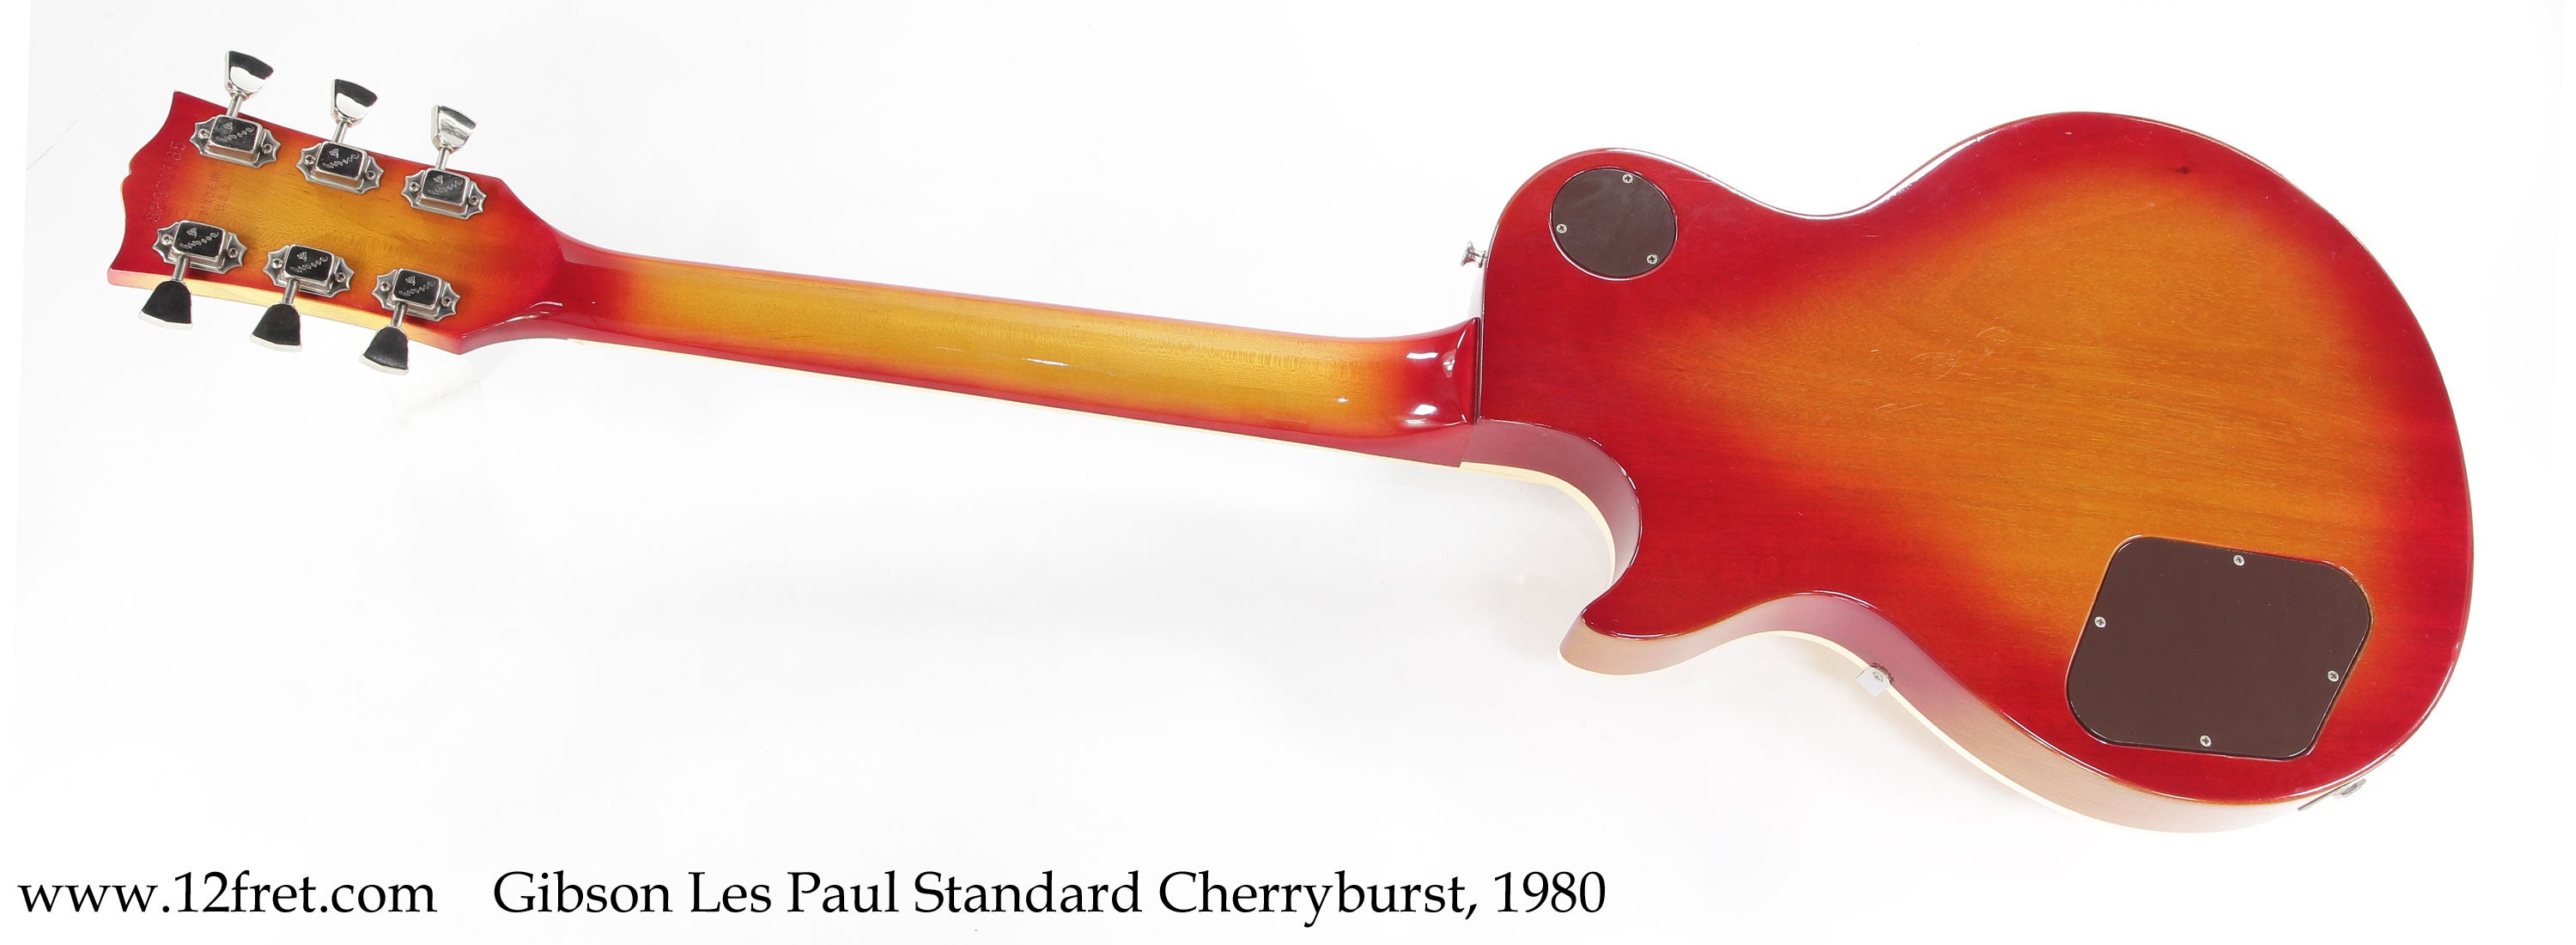 Gibson Les Paul Standard Cherryburst, 1980 - The Twelfth Fret